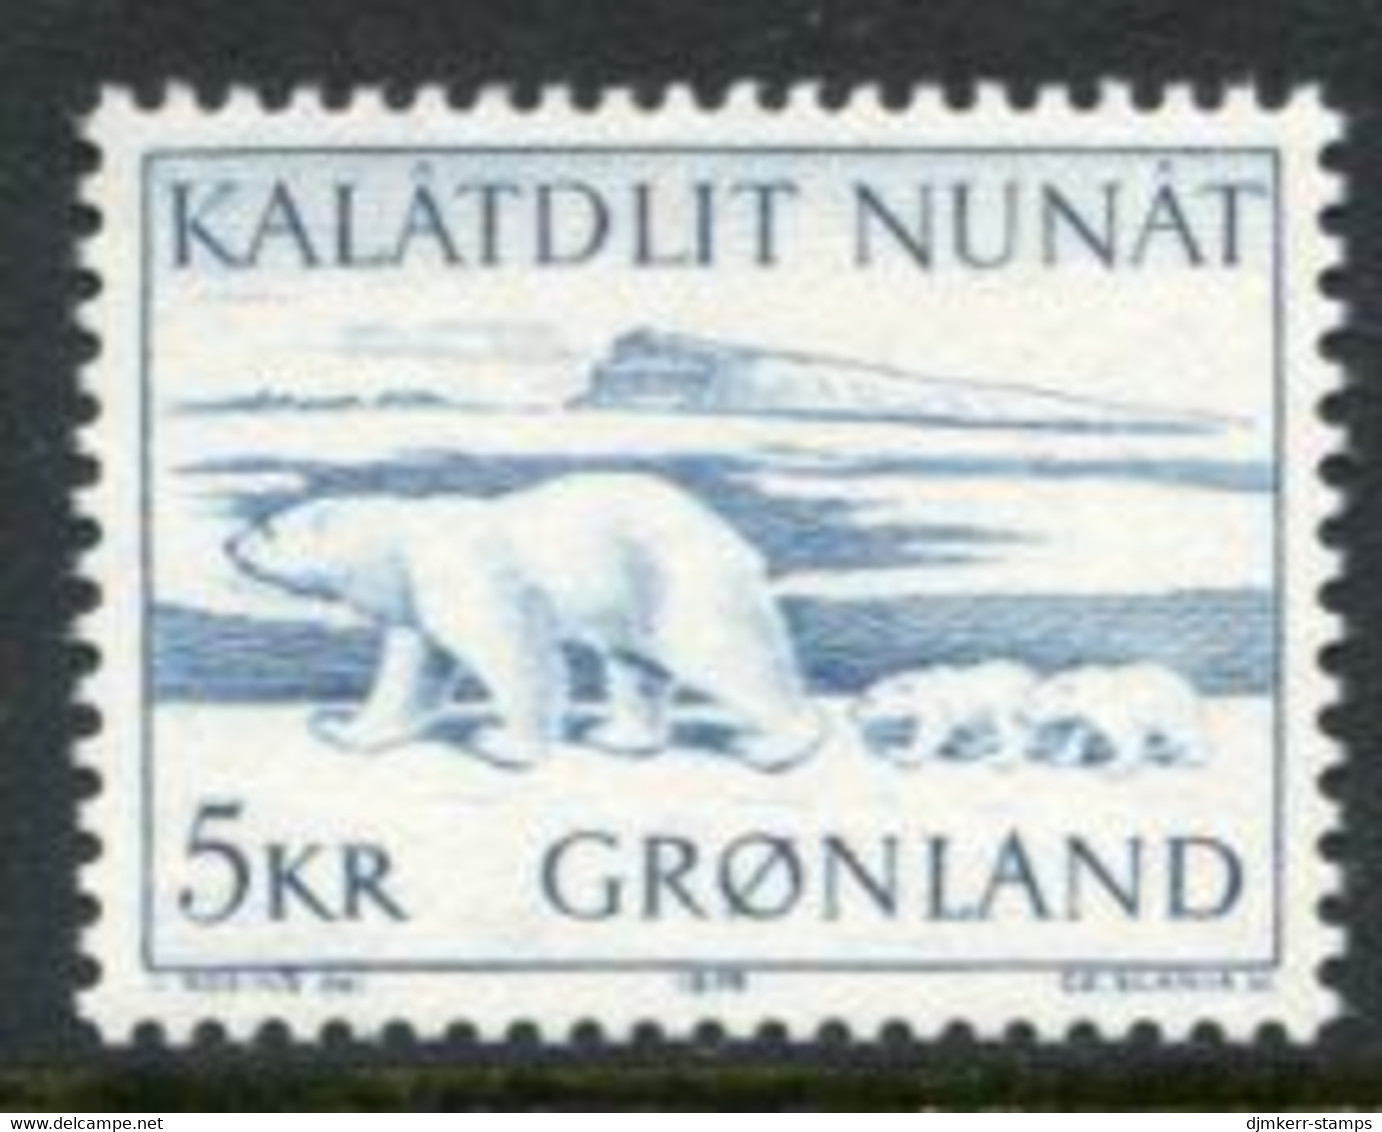 GREENLAND 1976 Polar Bear MNH / **.  Michel 96 - Unused Stamps